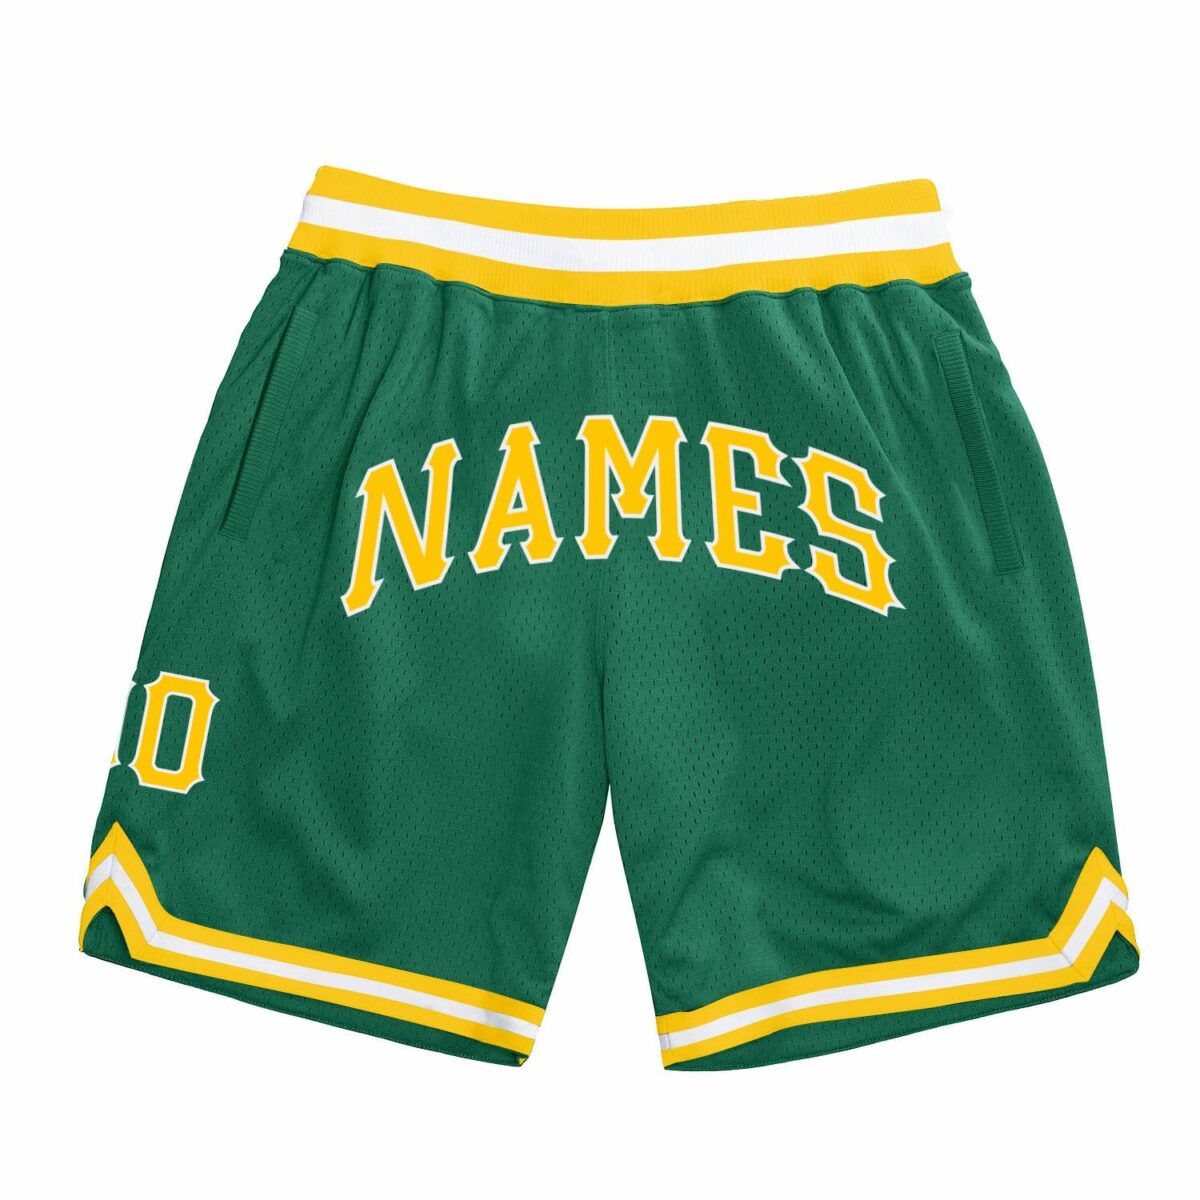 Green & Yellow Color Basketball Shorts 1